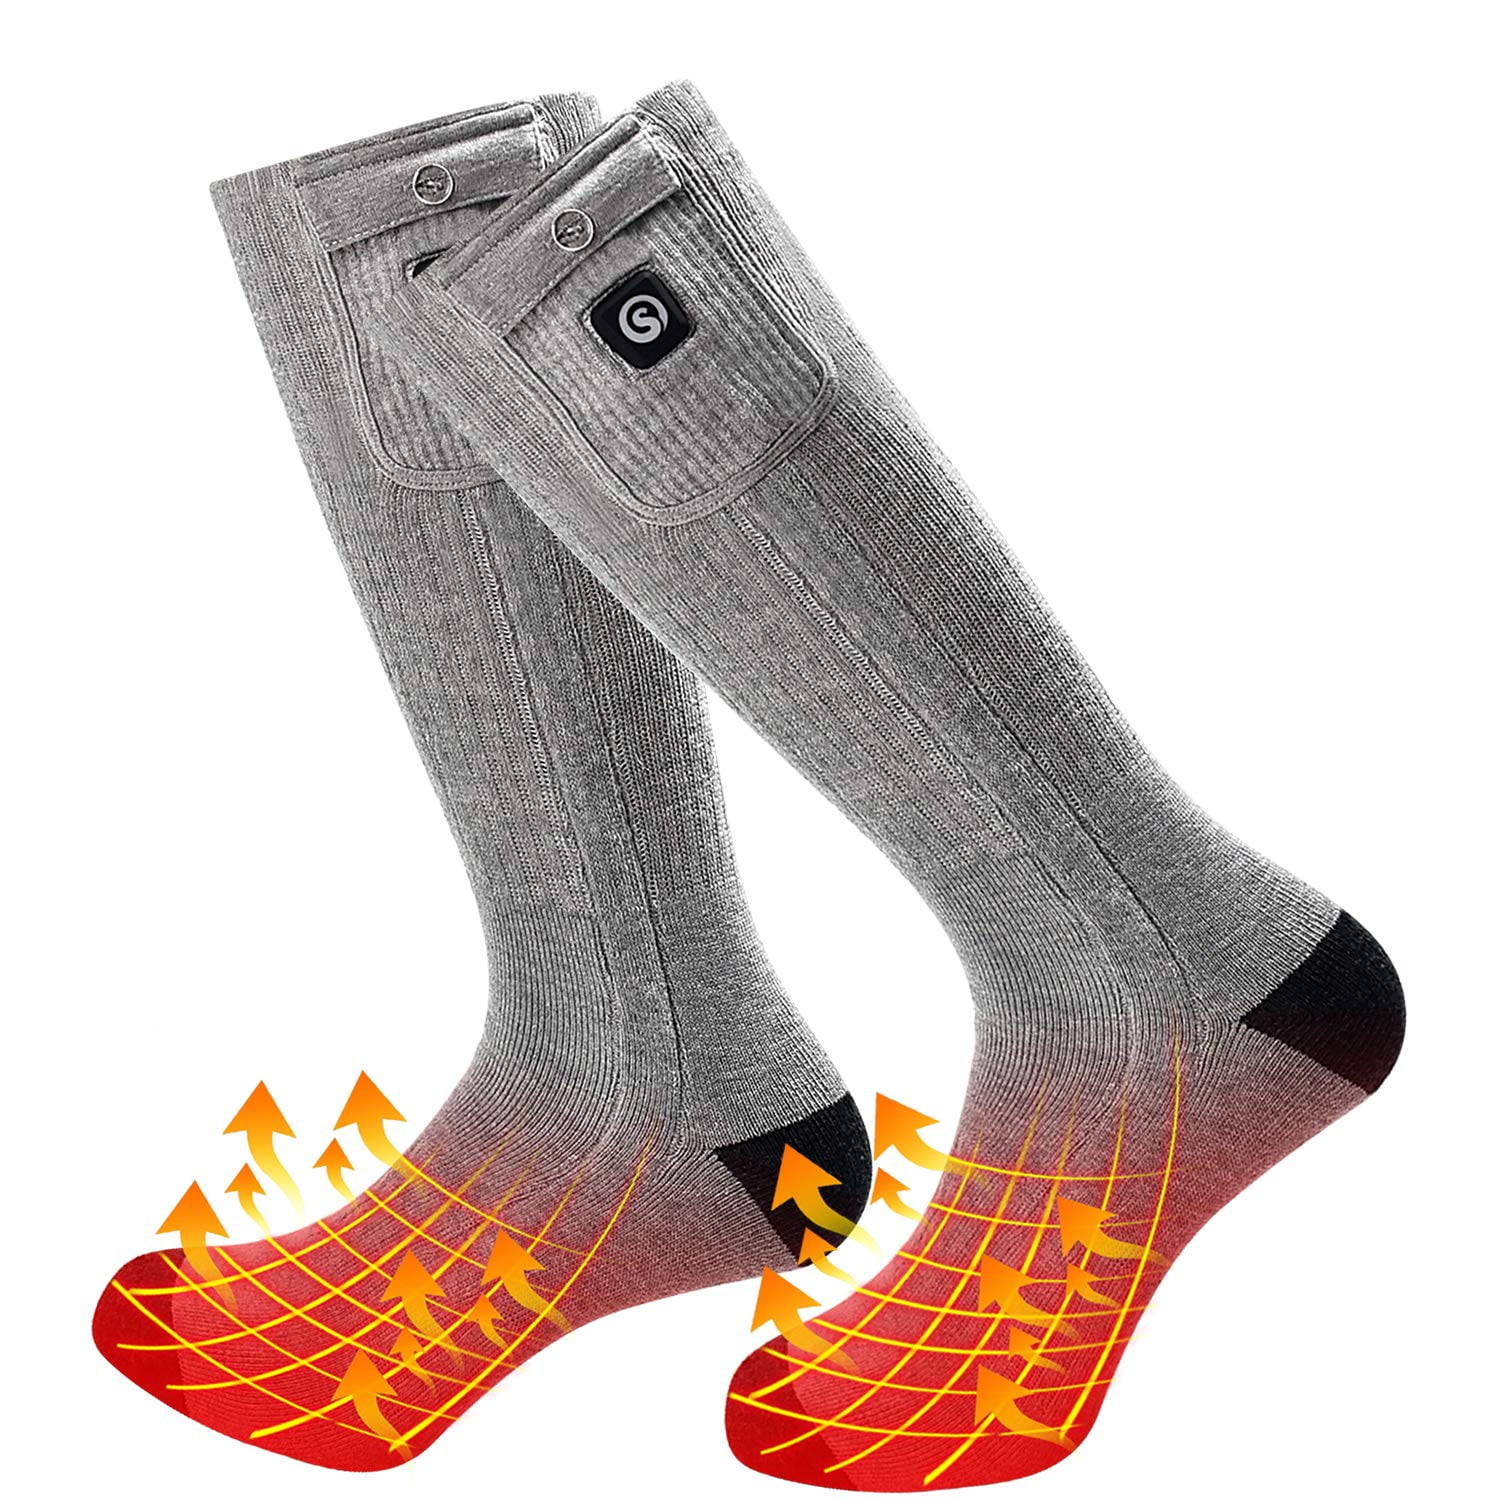 Heated Socks for Men Women Upgraded Heating Socks Recharge-able Battery 